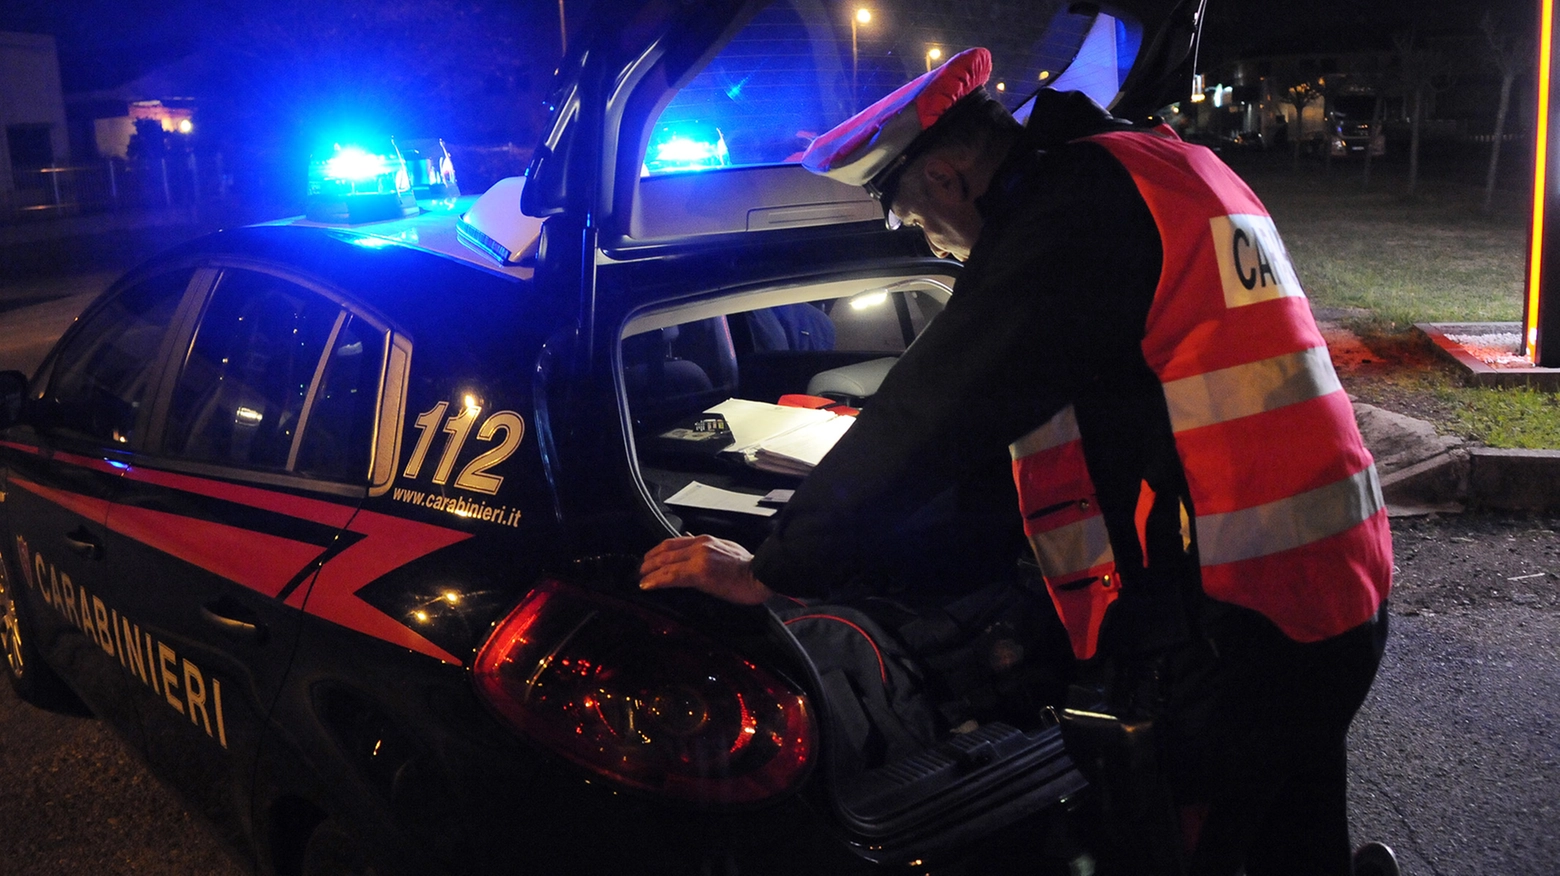 Sul furto indagano i carabinieri (Foto Garavaglia)